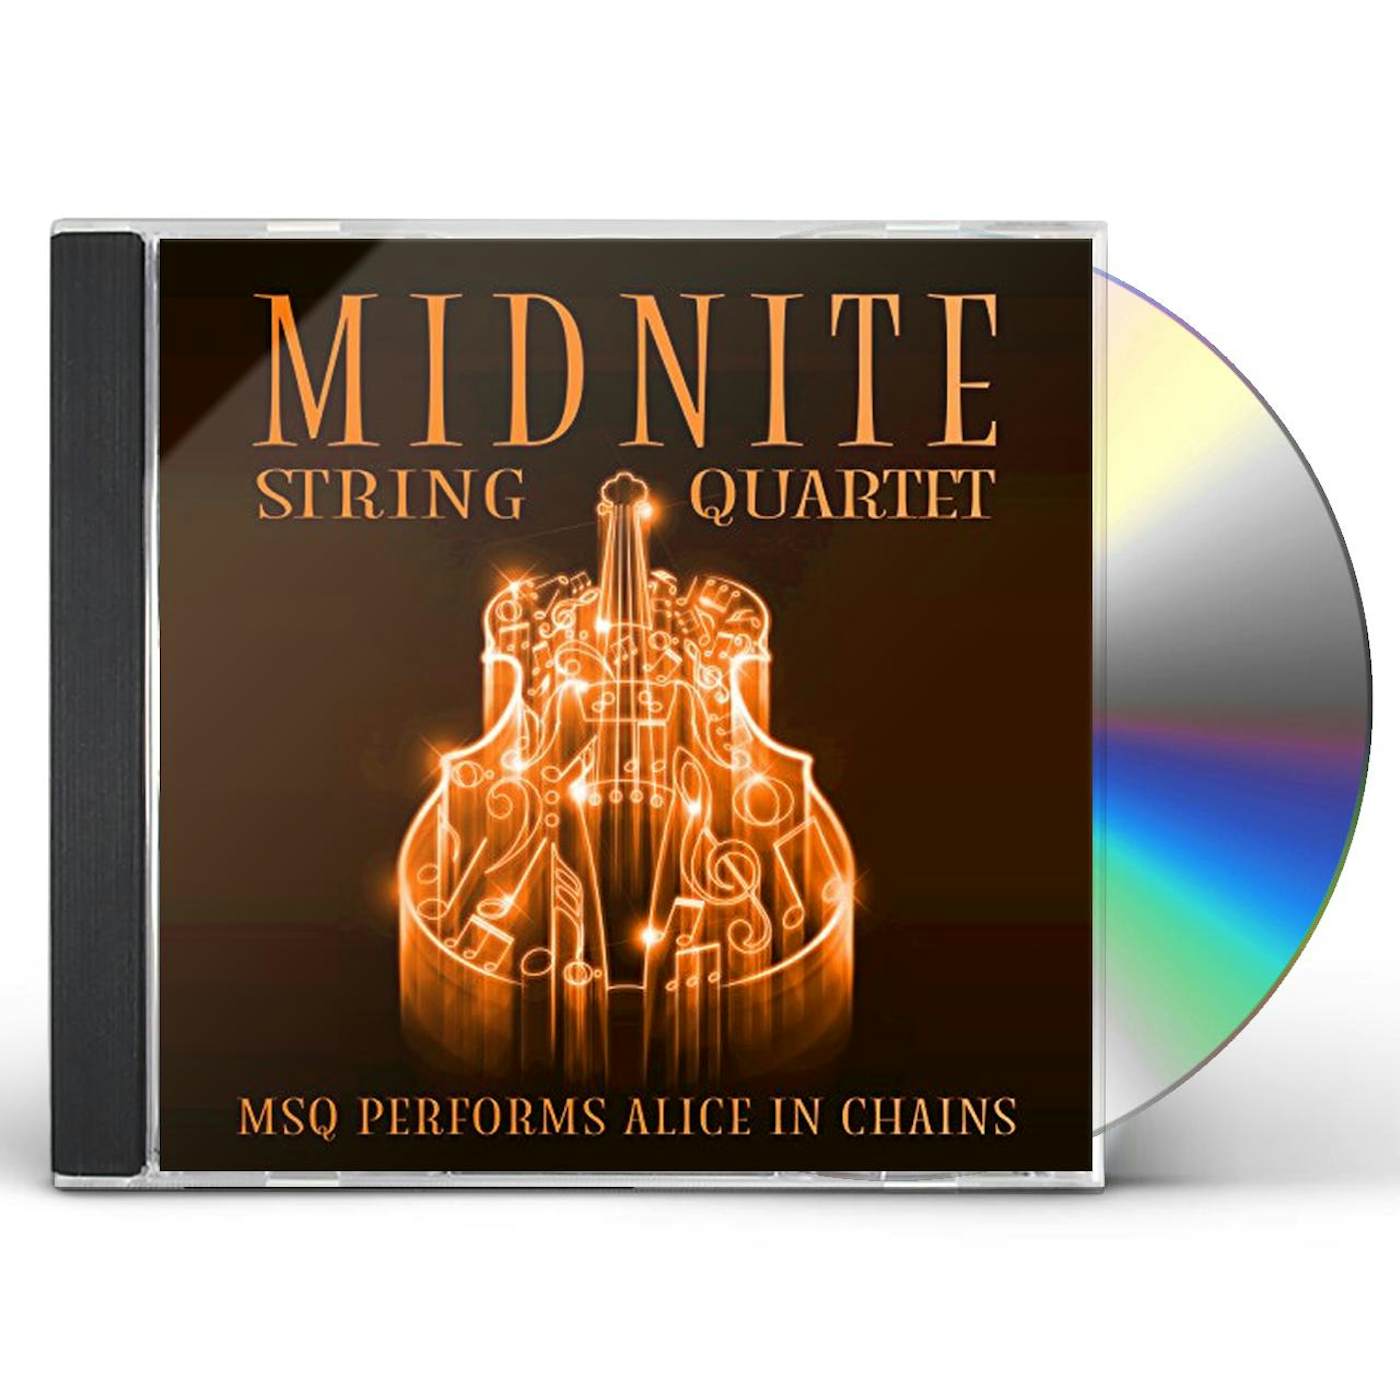 Midnite String Quartet MSQ PERFORMS ALICE IN CHAINS (MOD) CD